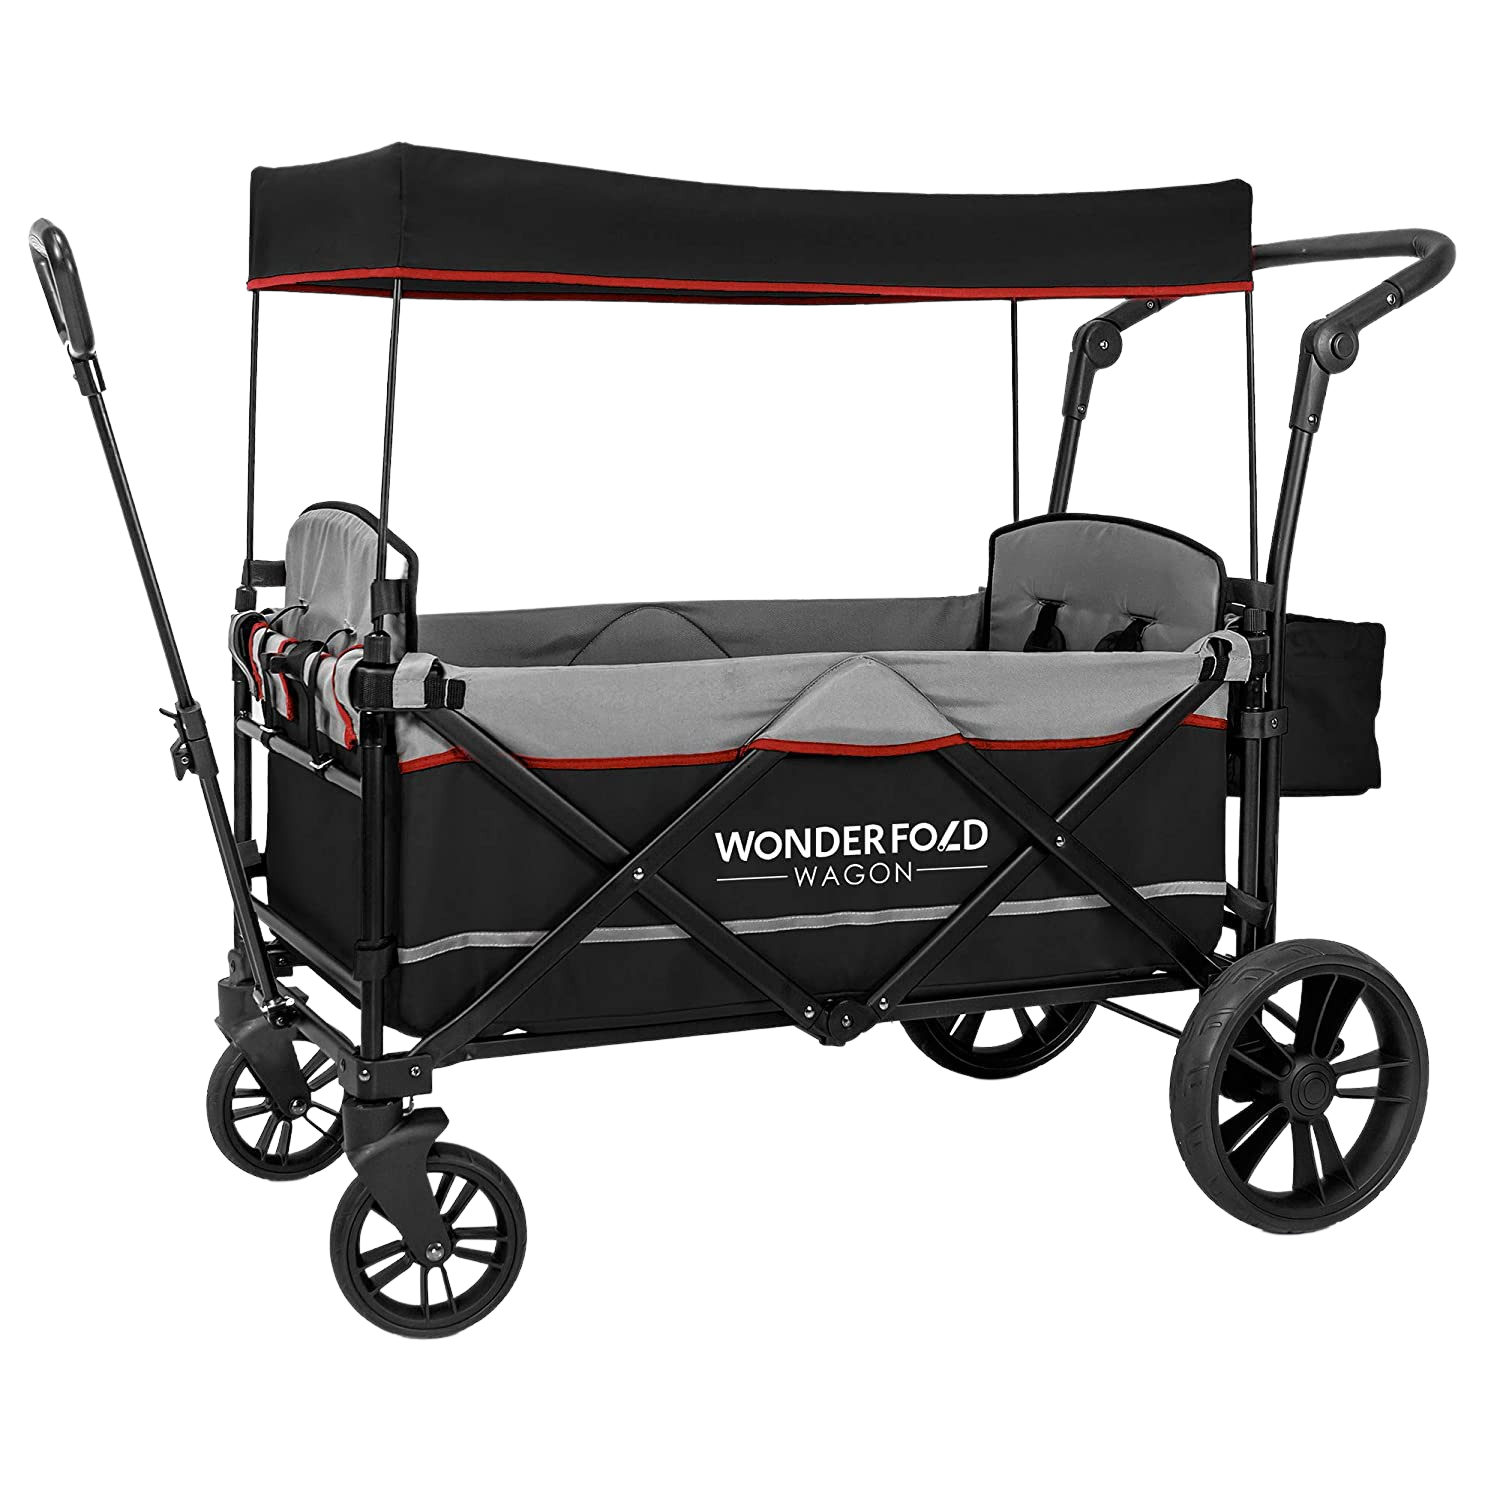 WonderFold Baby X2 Push/Pull 2-Passenger Double Stroller Wagon Black New